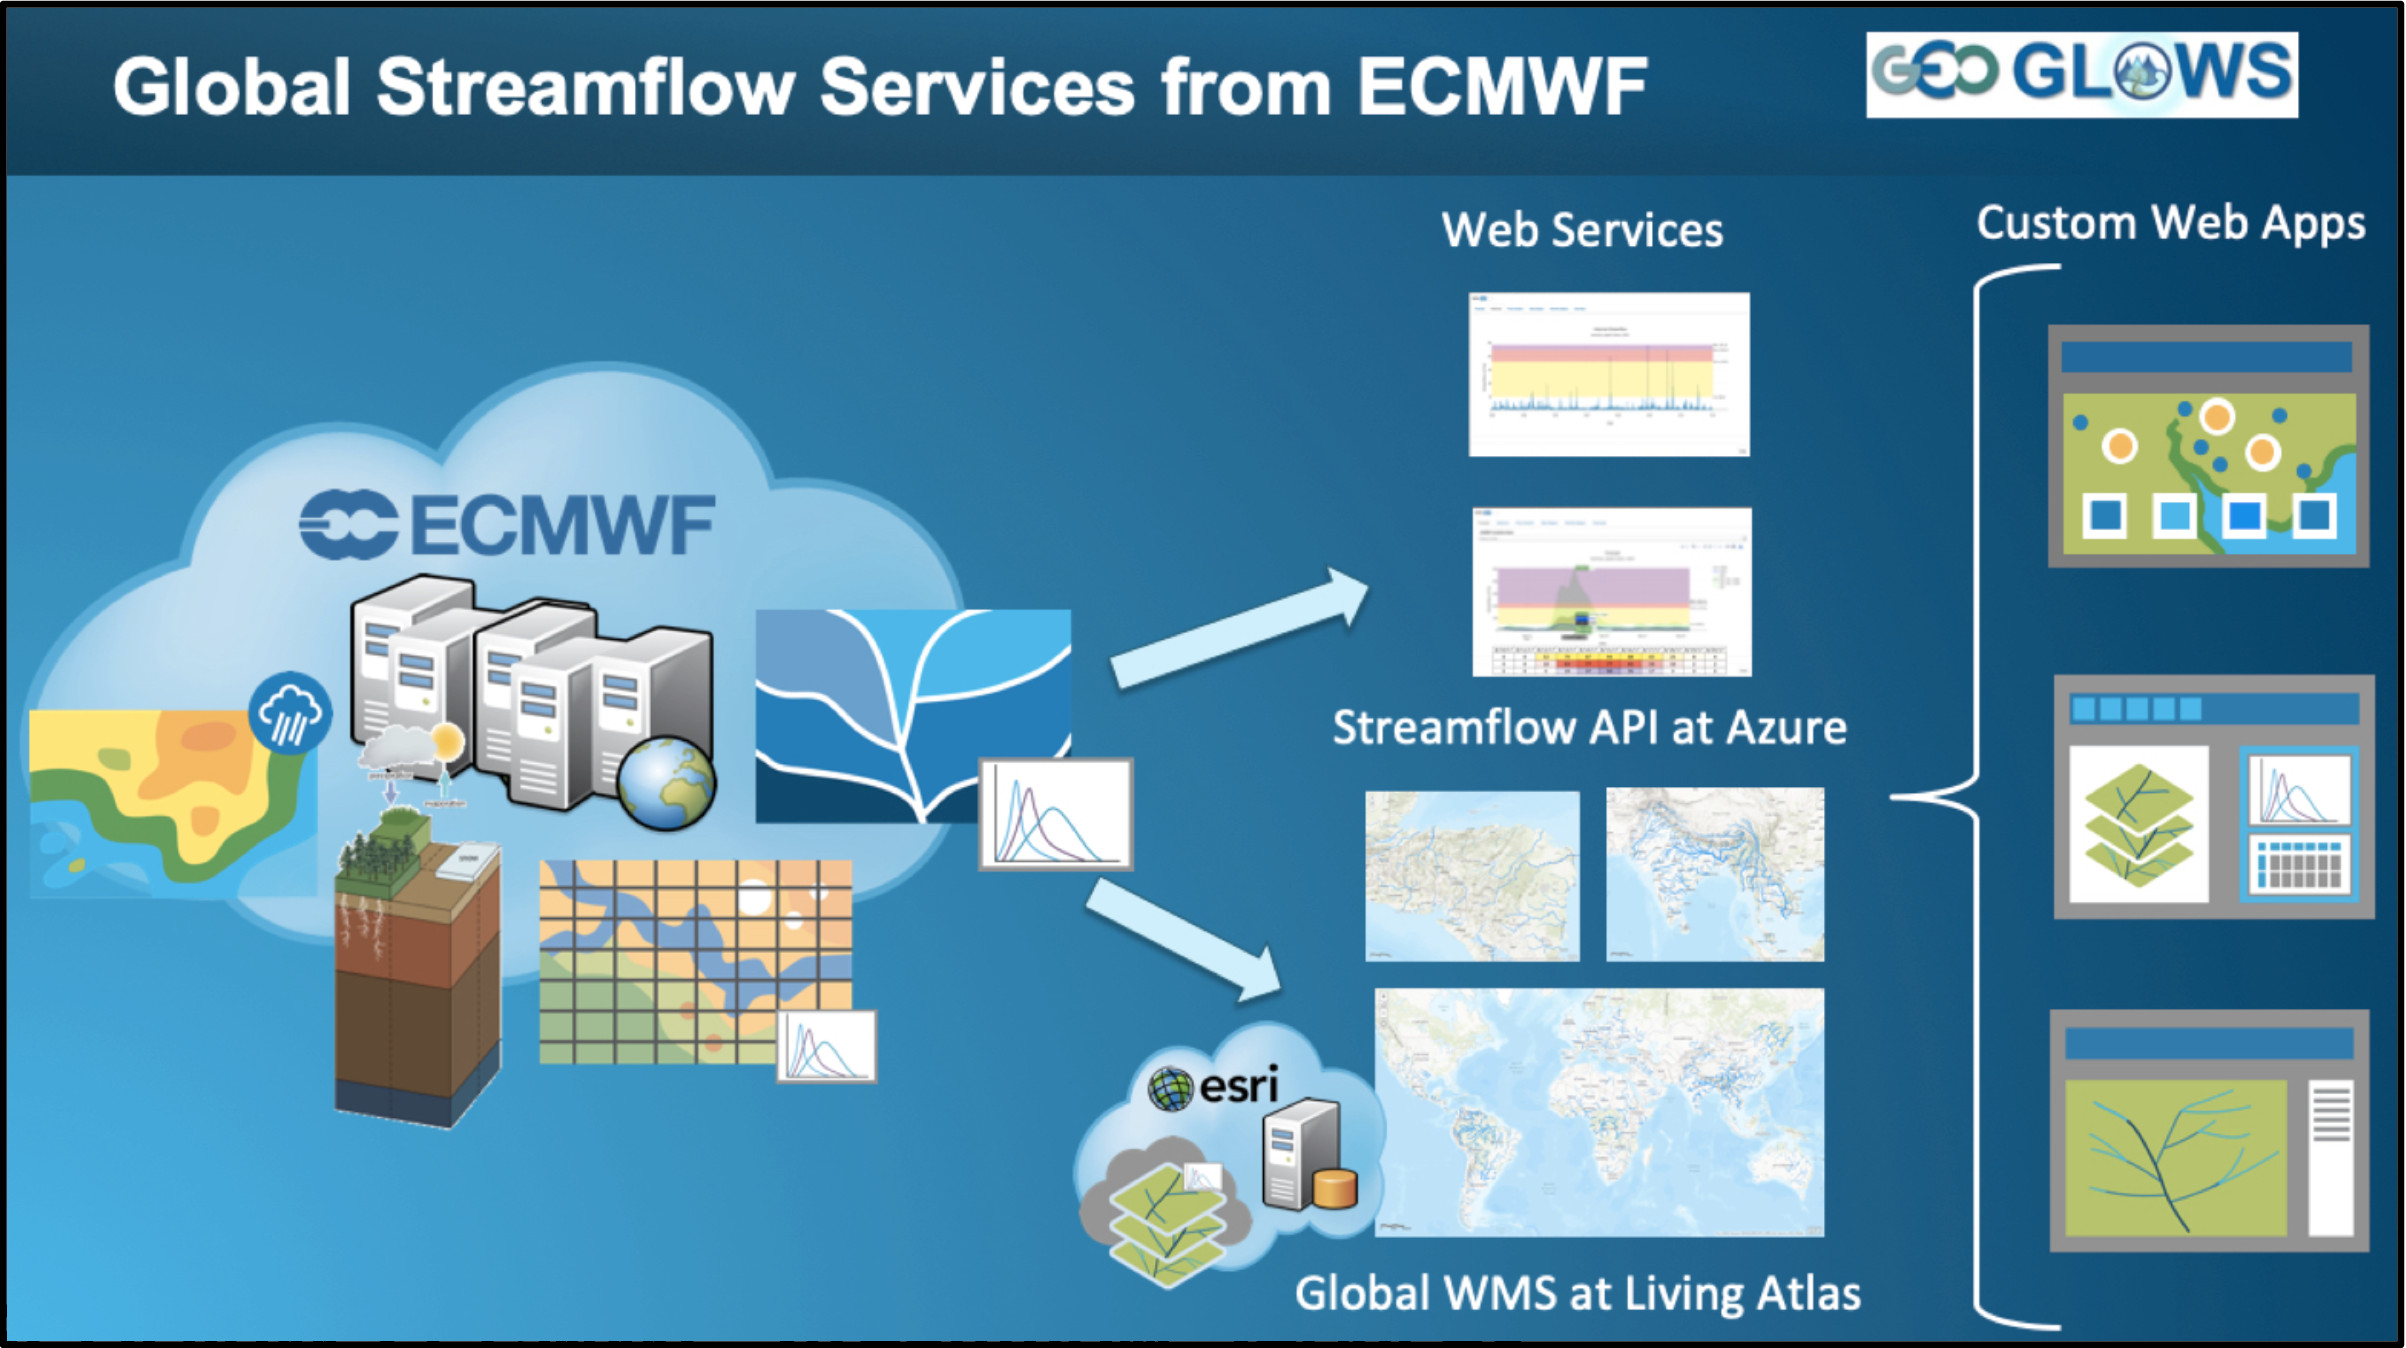 GEOGloWS ECMWF Streamflow Services